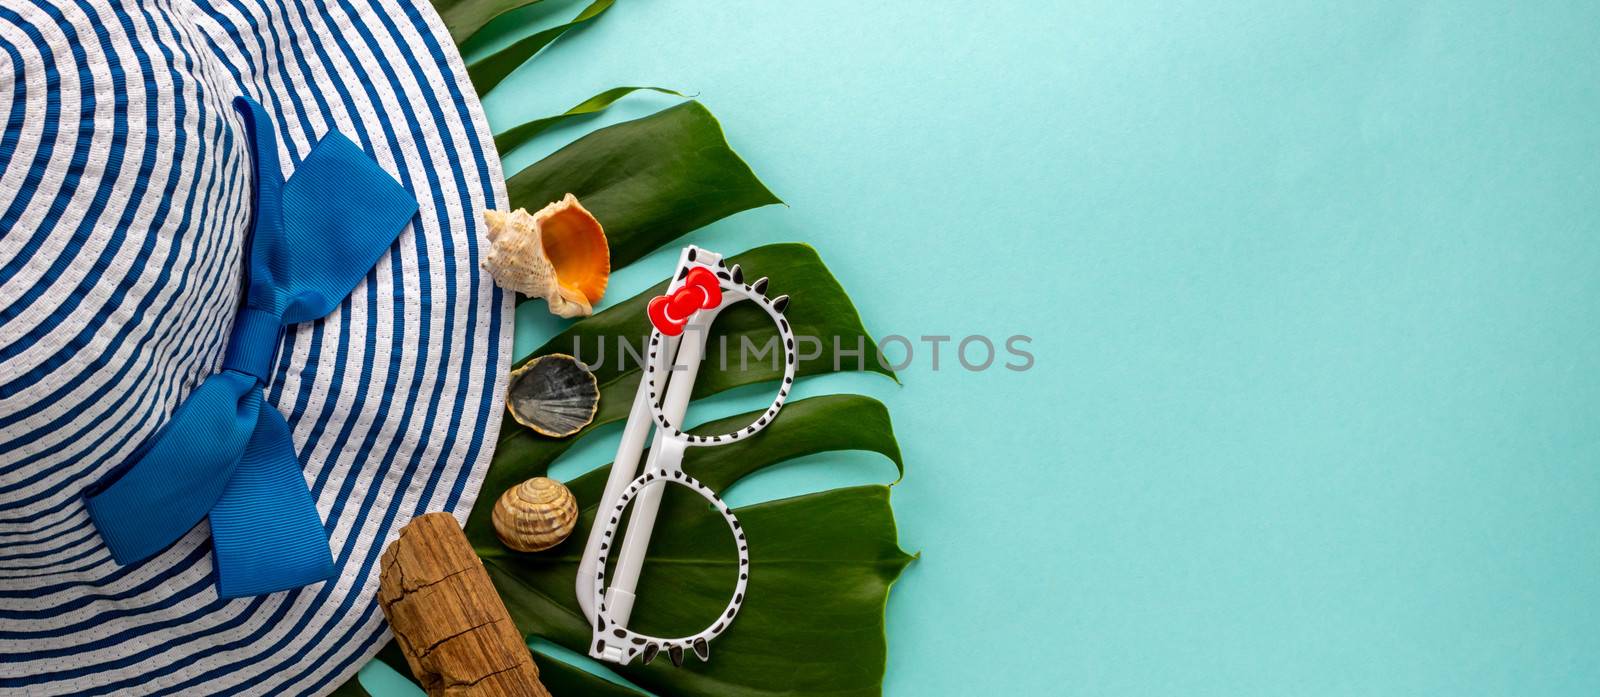 Striped hat, sunglasses, seashells, tropical monstera leaves on a blue background by lapushka62